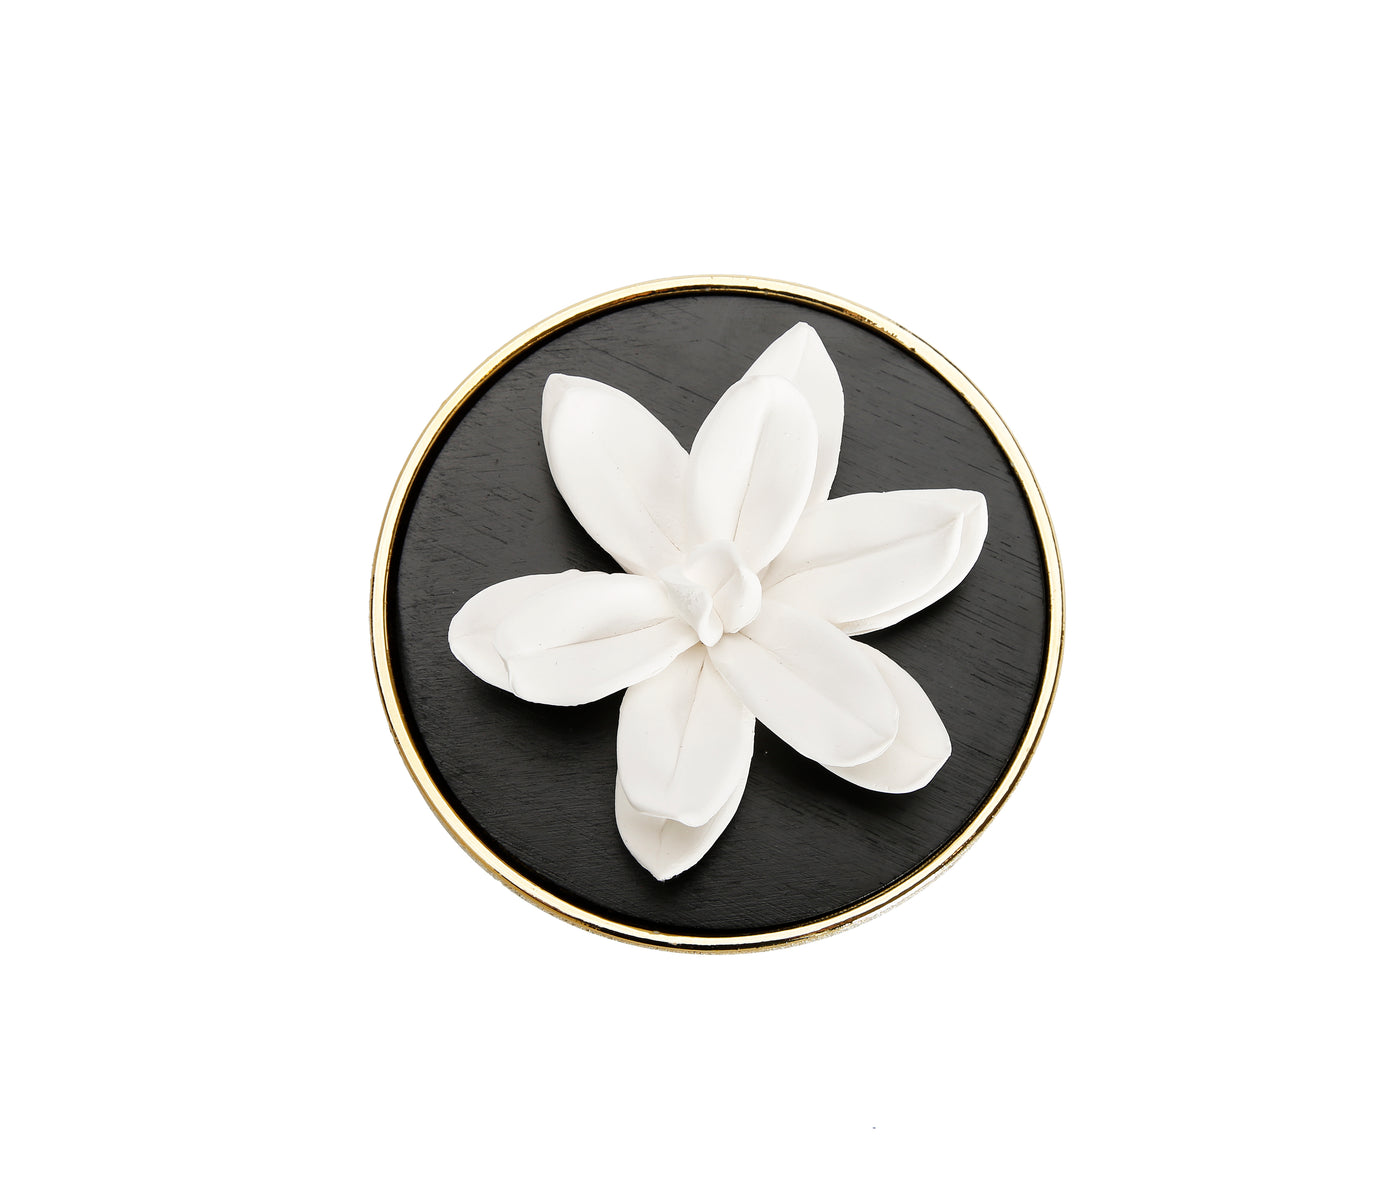 Gold Hemispheric shape Diffuser Black Lid/White Flower, “Iris and Rose” aroma